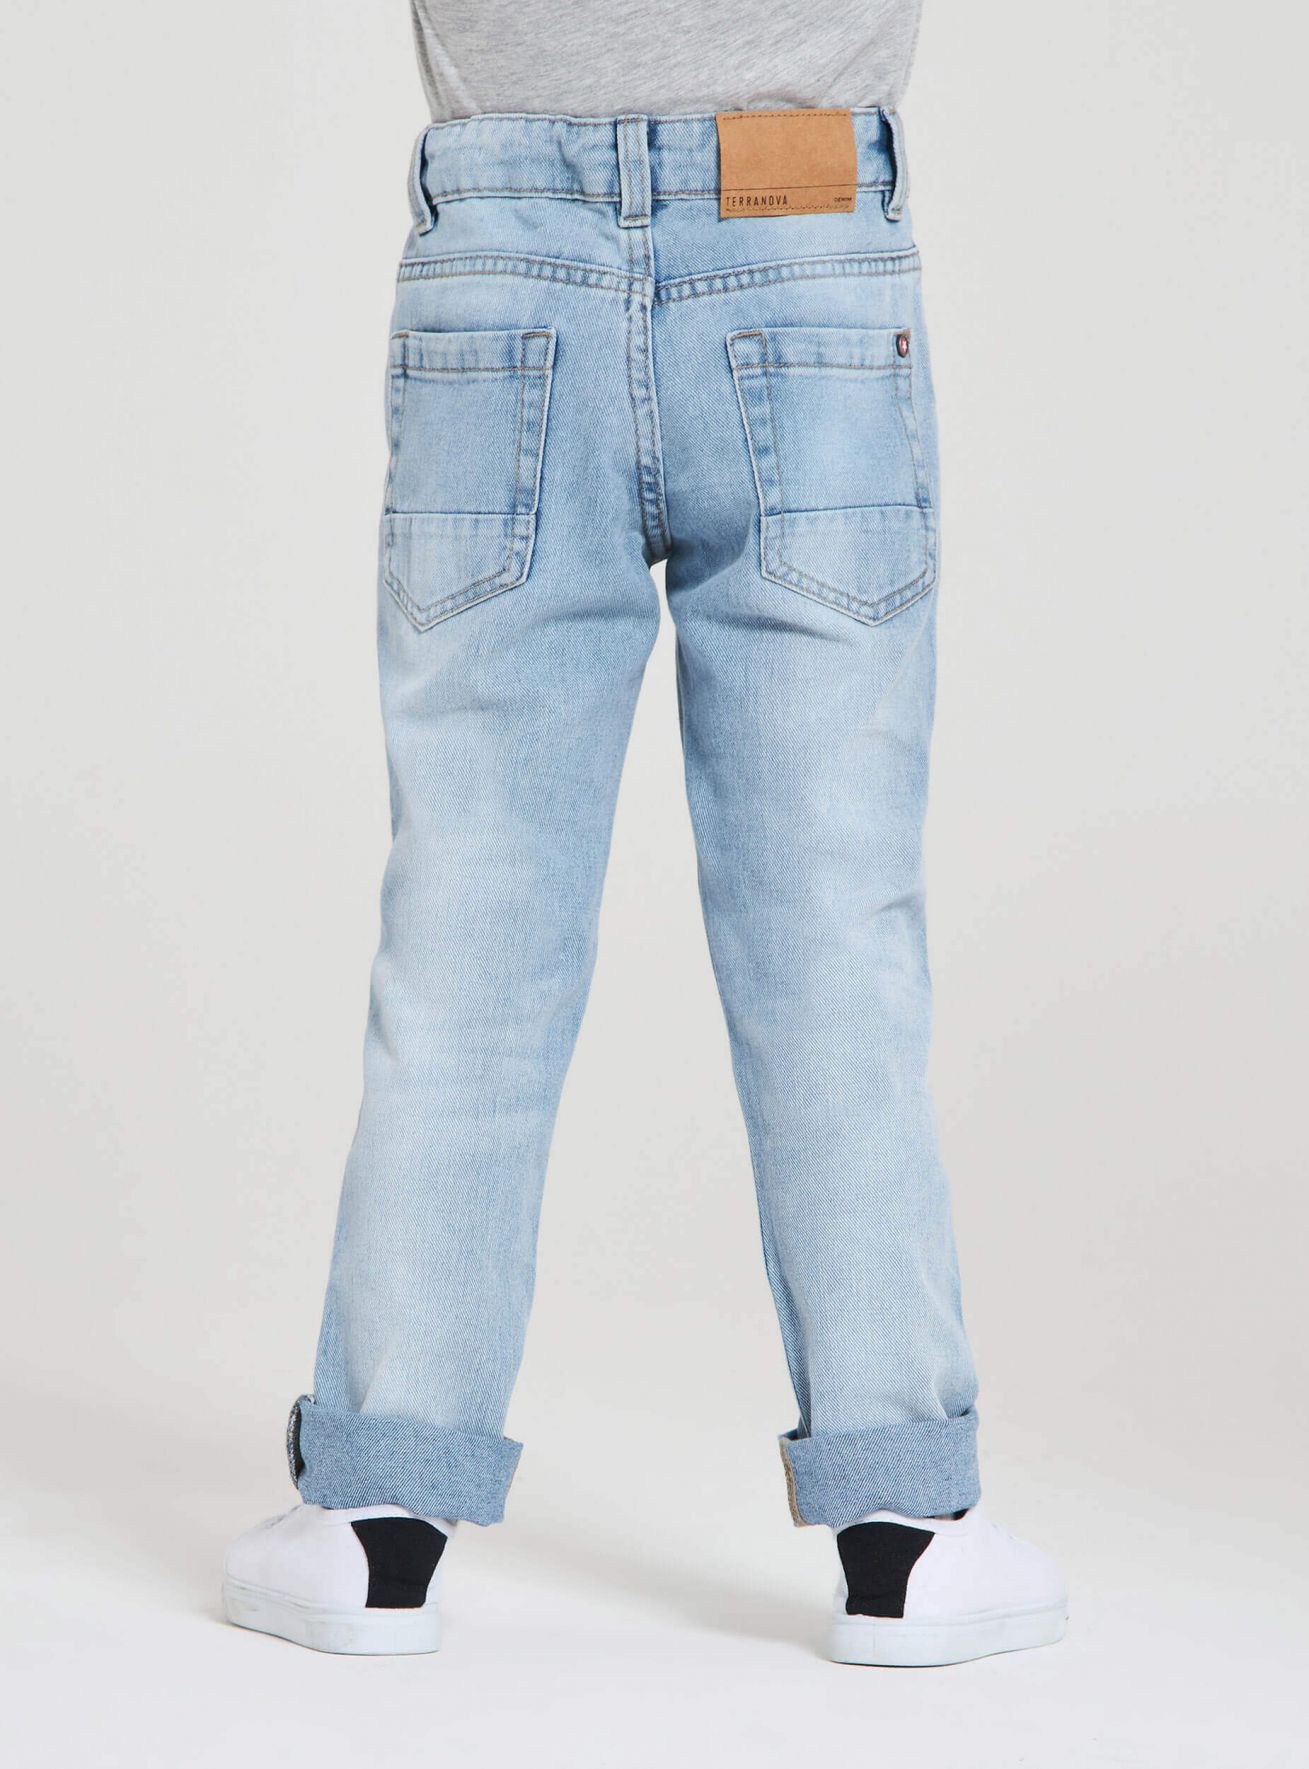 blue 73 jeans